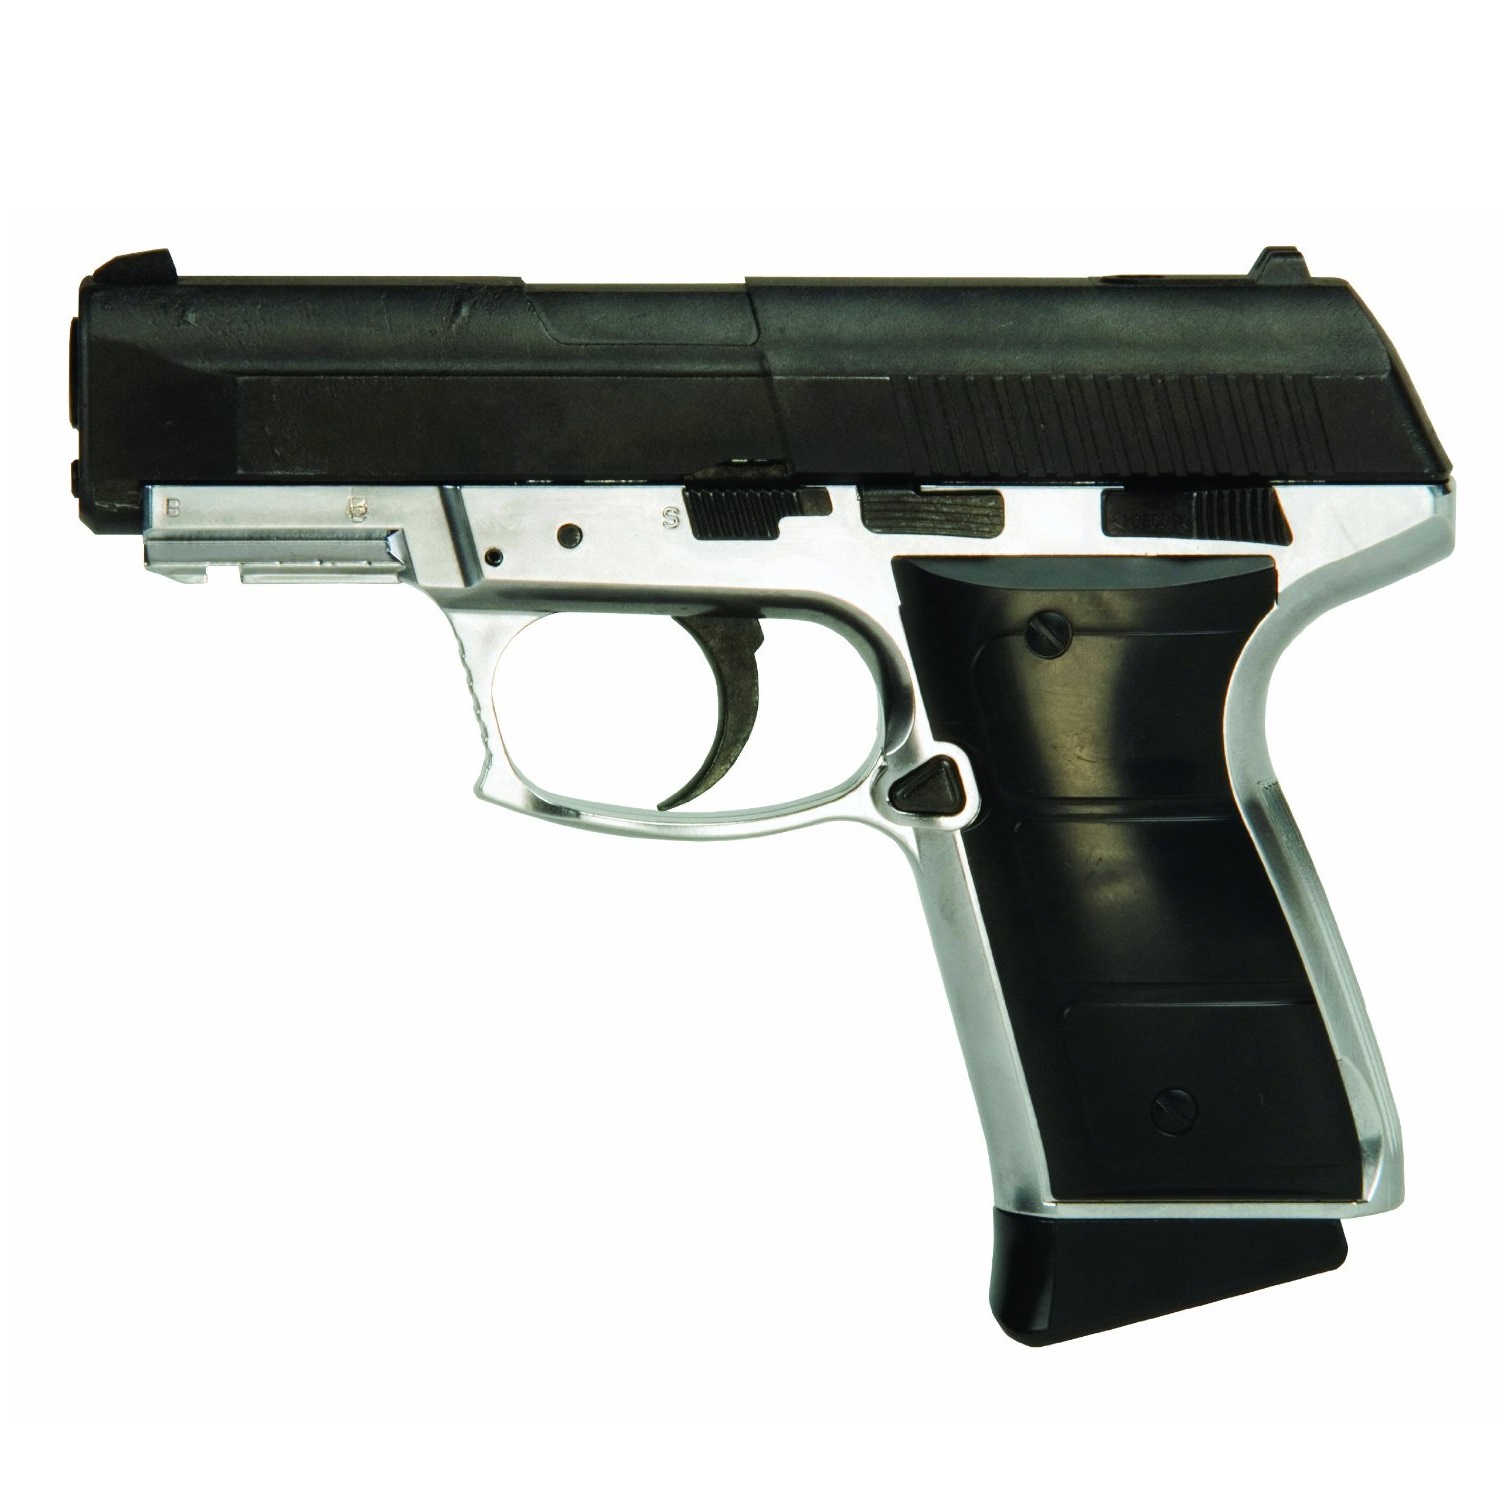 Daisy 1107813 Model 5501 Co2 Blowback BB Pistol for sale online 